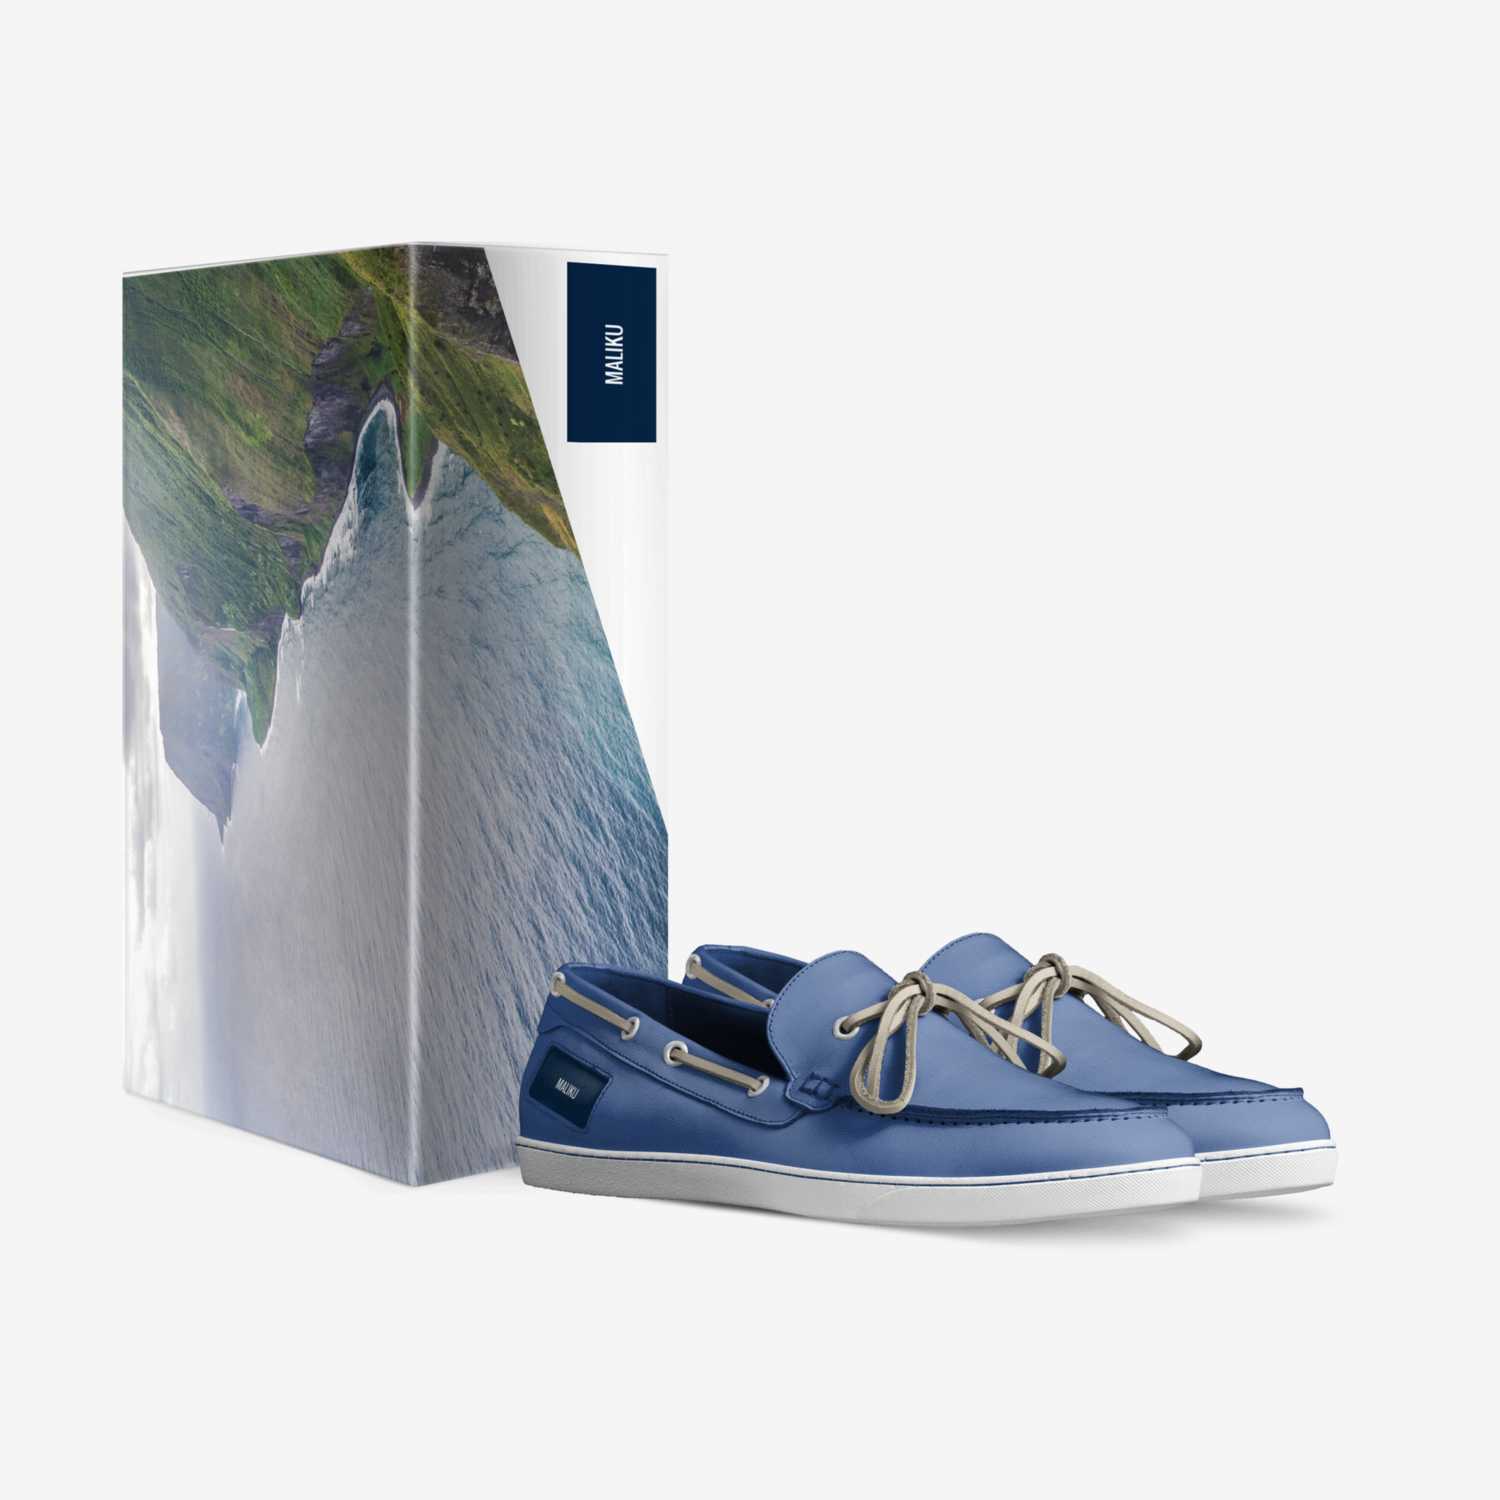 MALIKU custom made in Italy shoes by Meliza Rosado | Box view